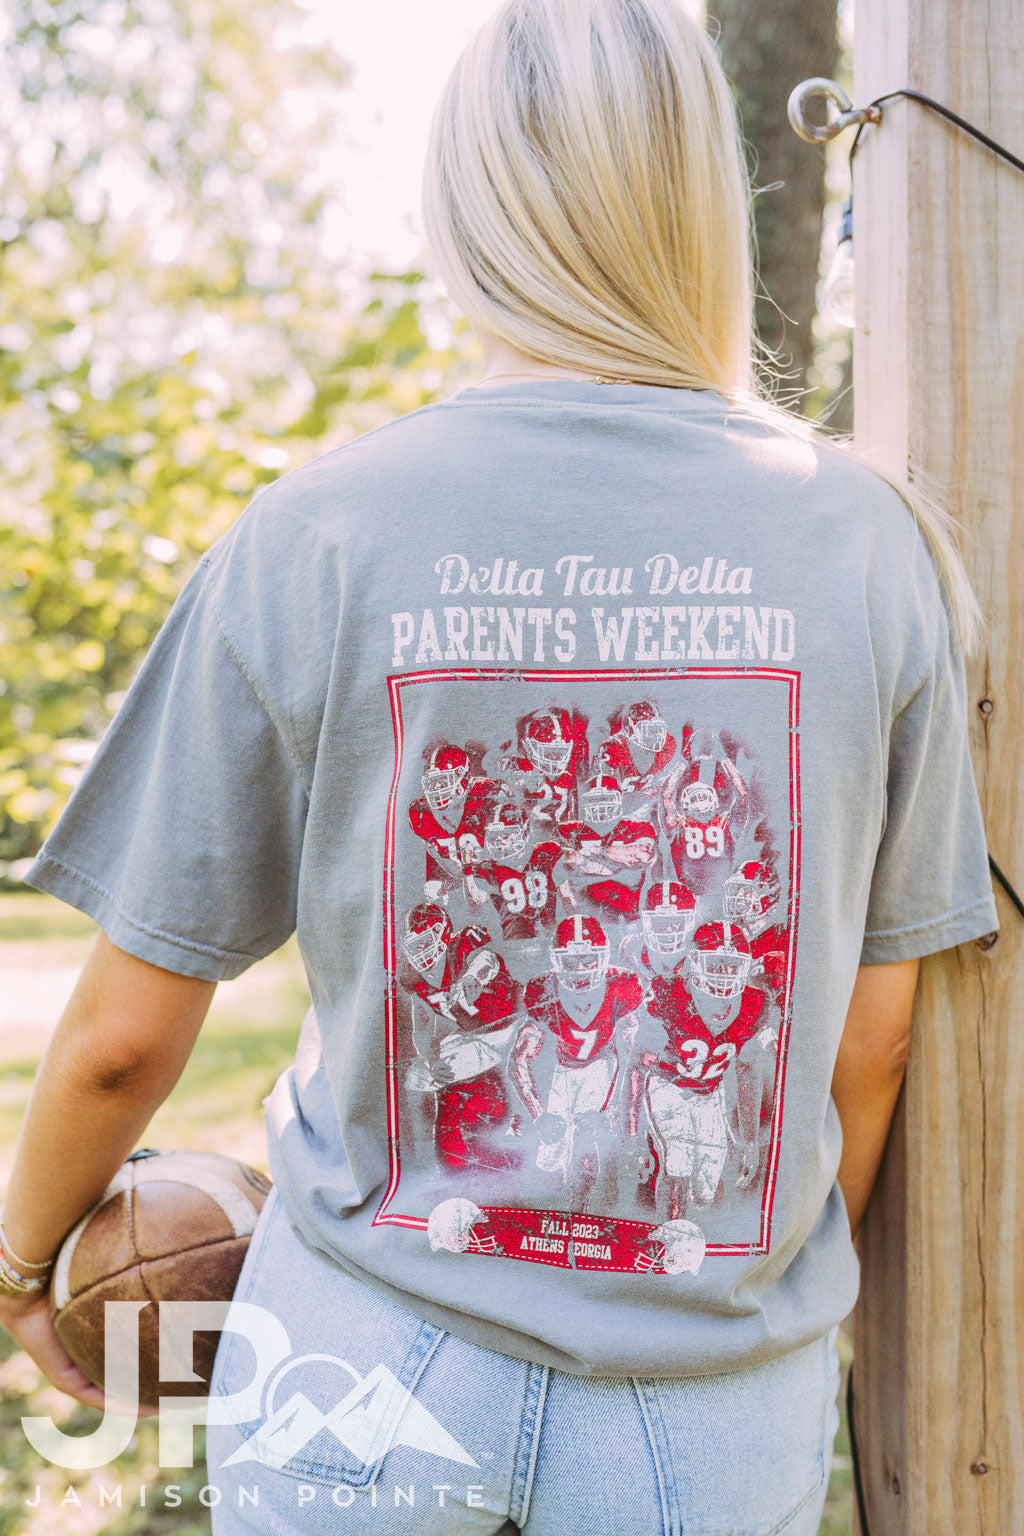 Delta Tau Delta Football Team Parents Weekend Shirt